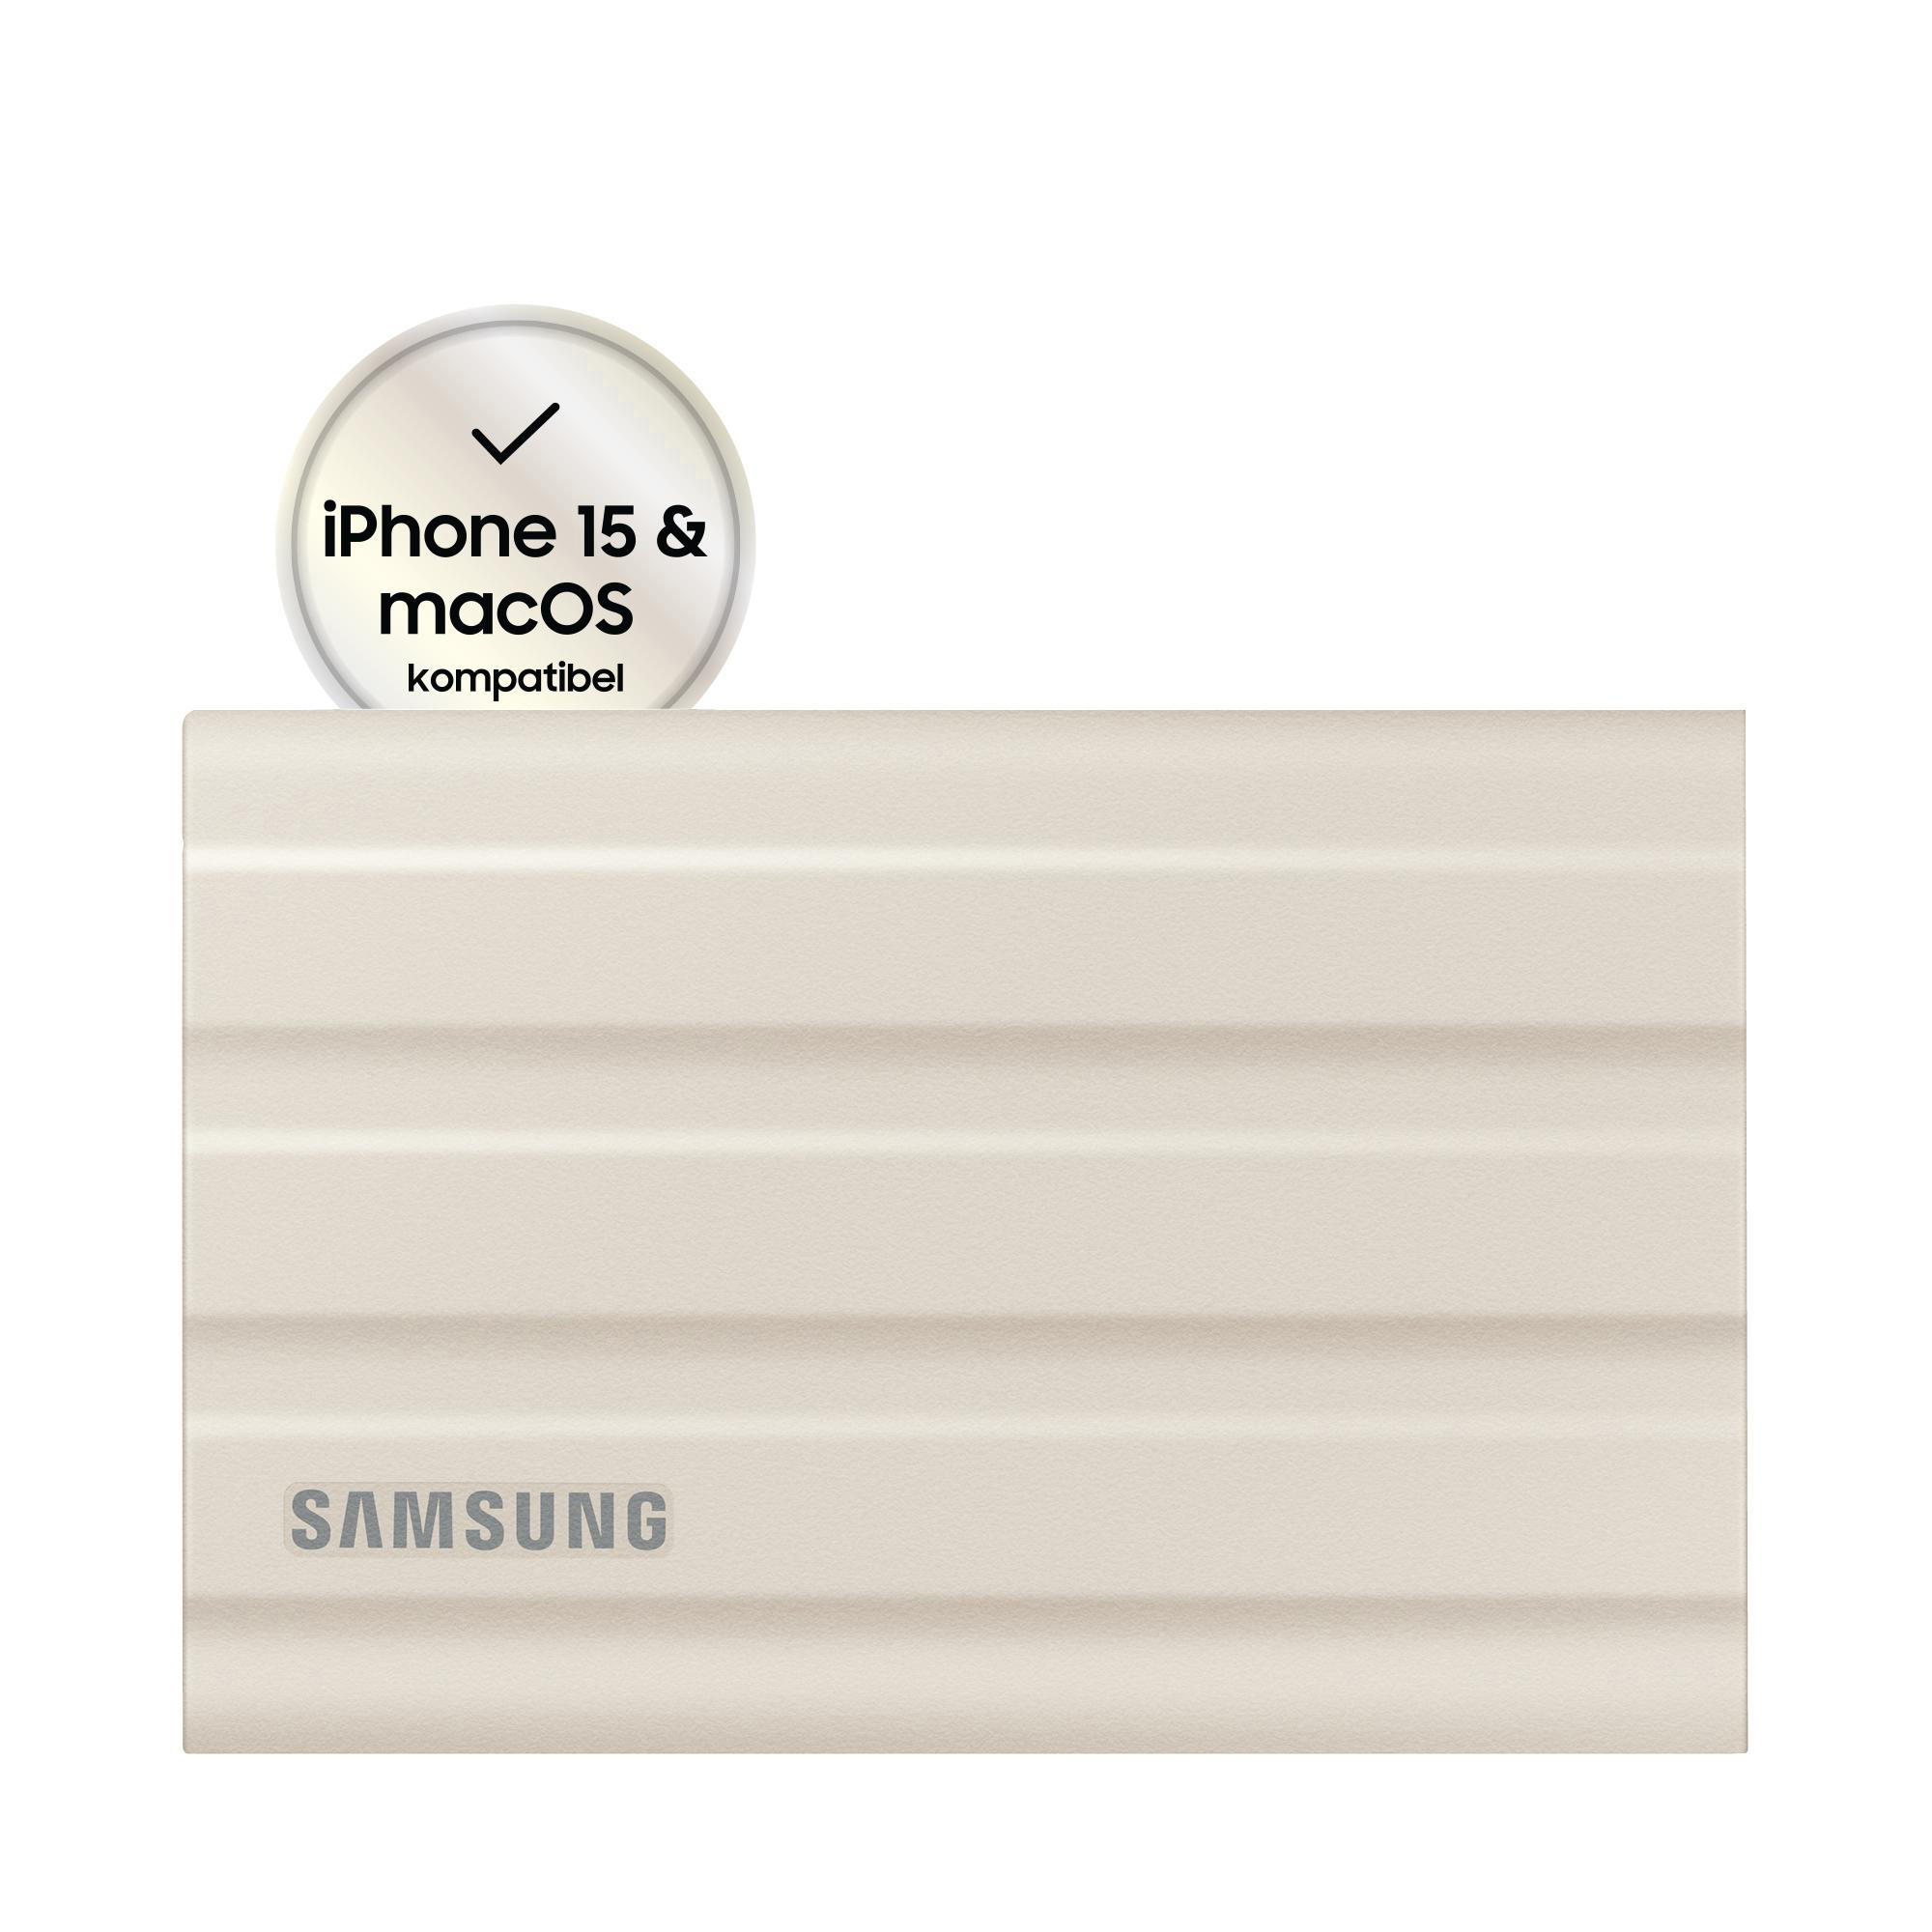 PC/Mac SAMSUNG Shield T7 TB Beige 2 SSD, SSD Portable Festplatte, extern,